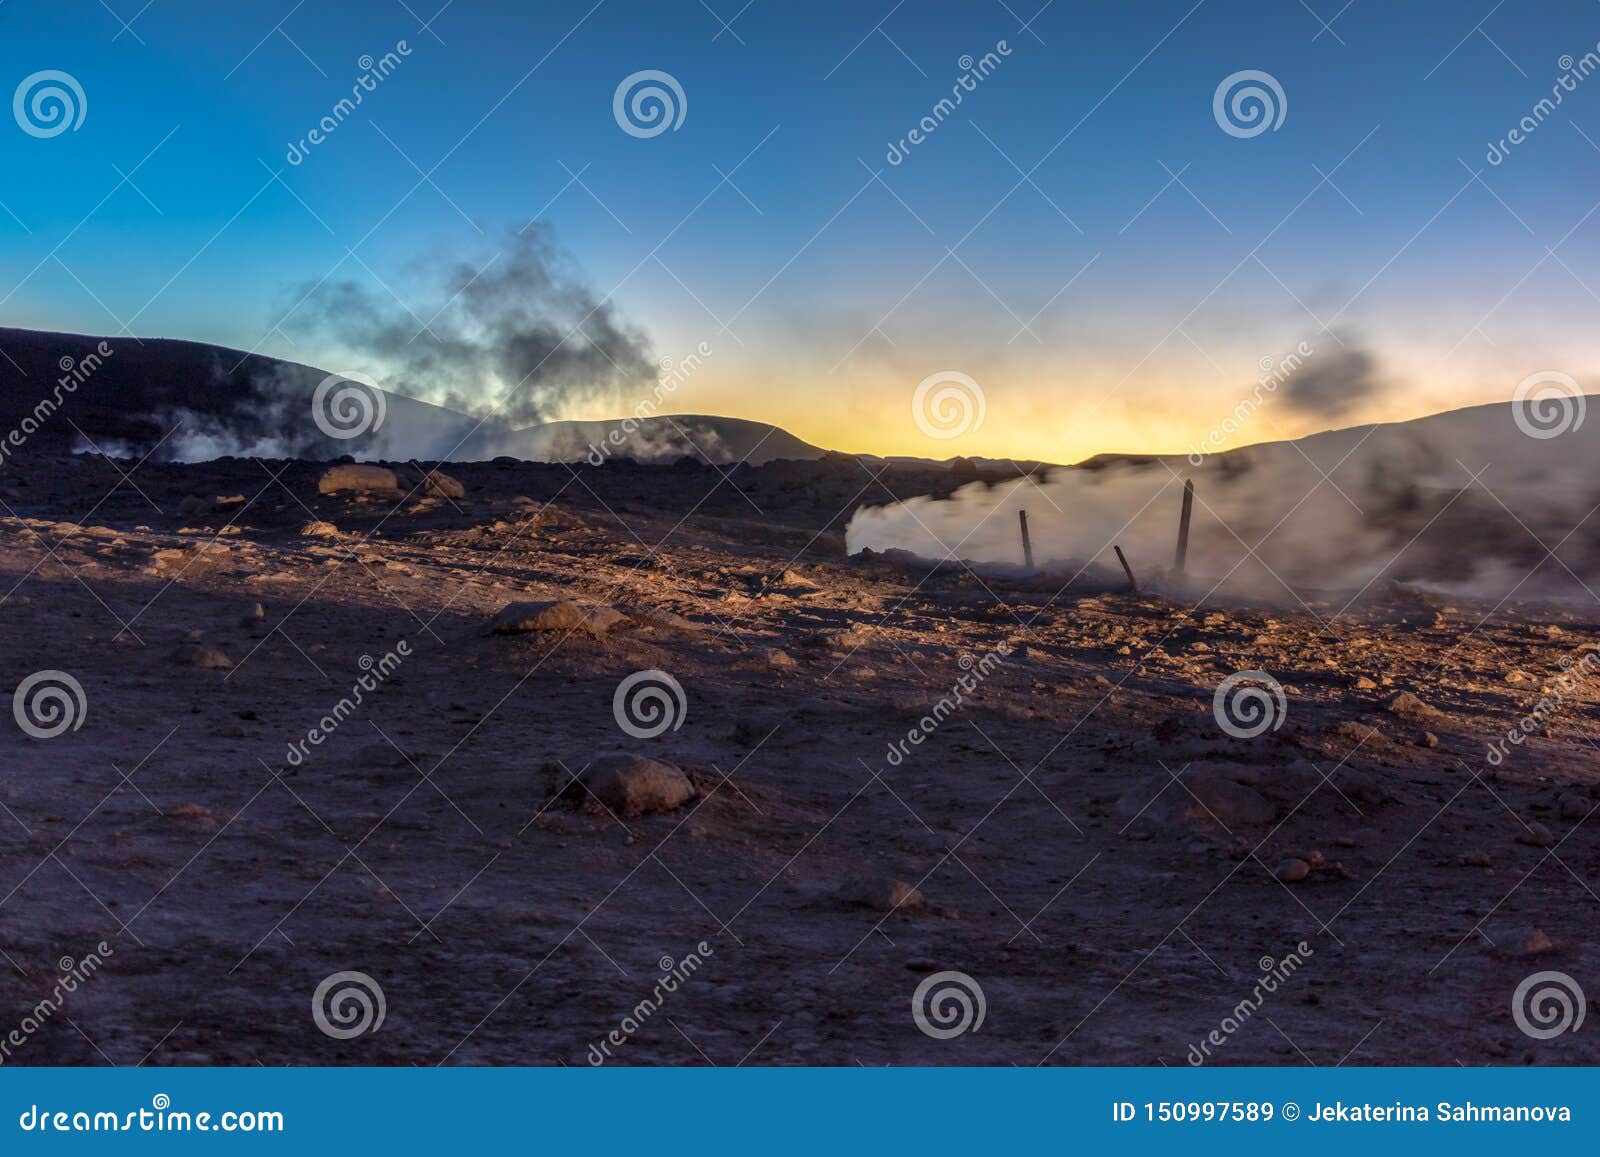 the sol de la manana, rising sun steaming geyser field high up in a massive crater in bolivian altiplano, bolivia